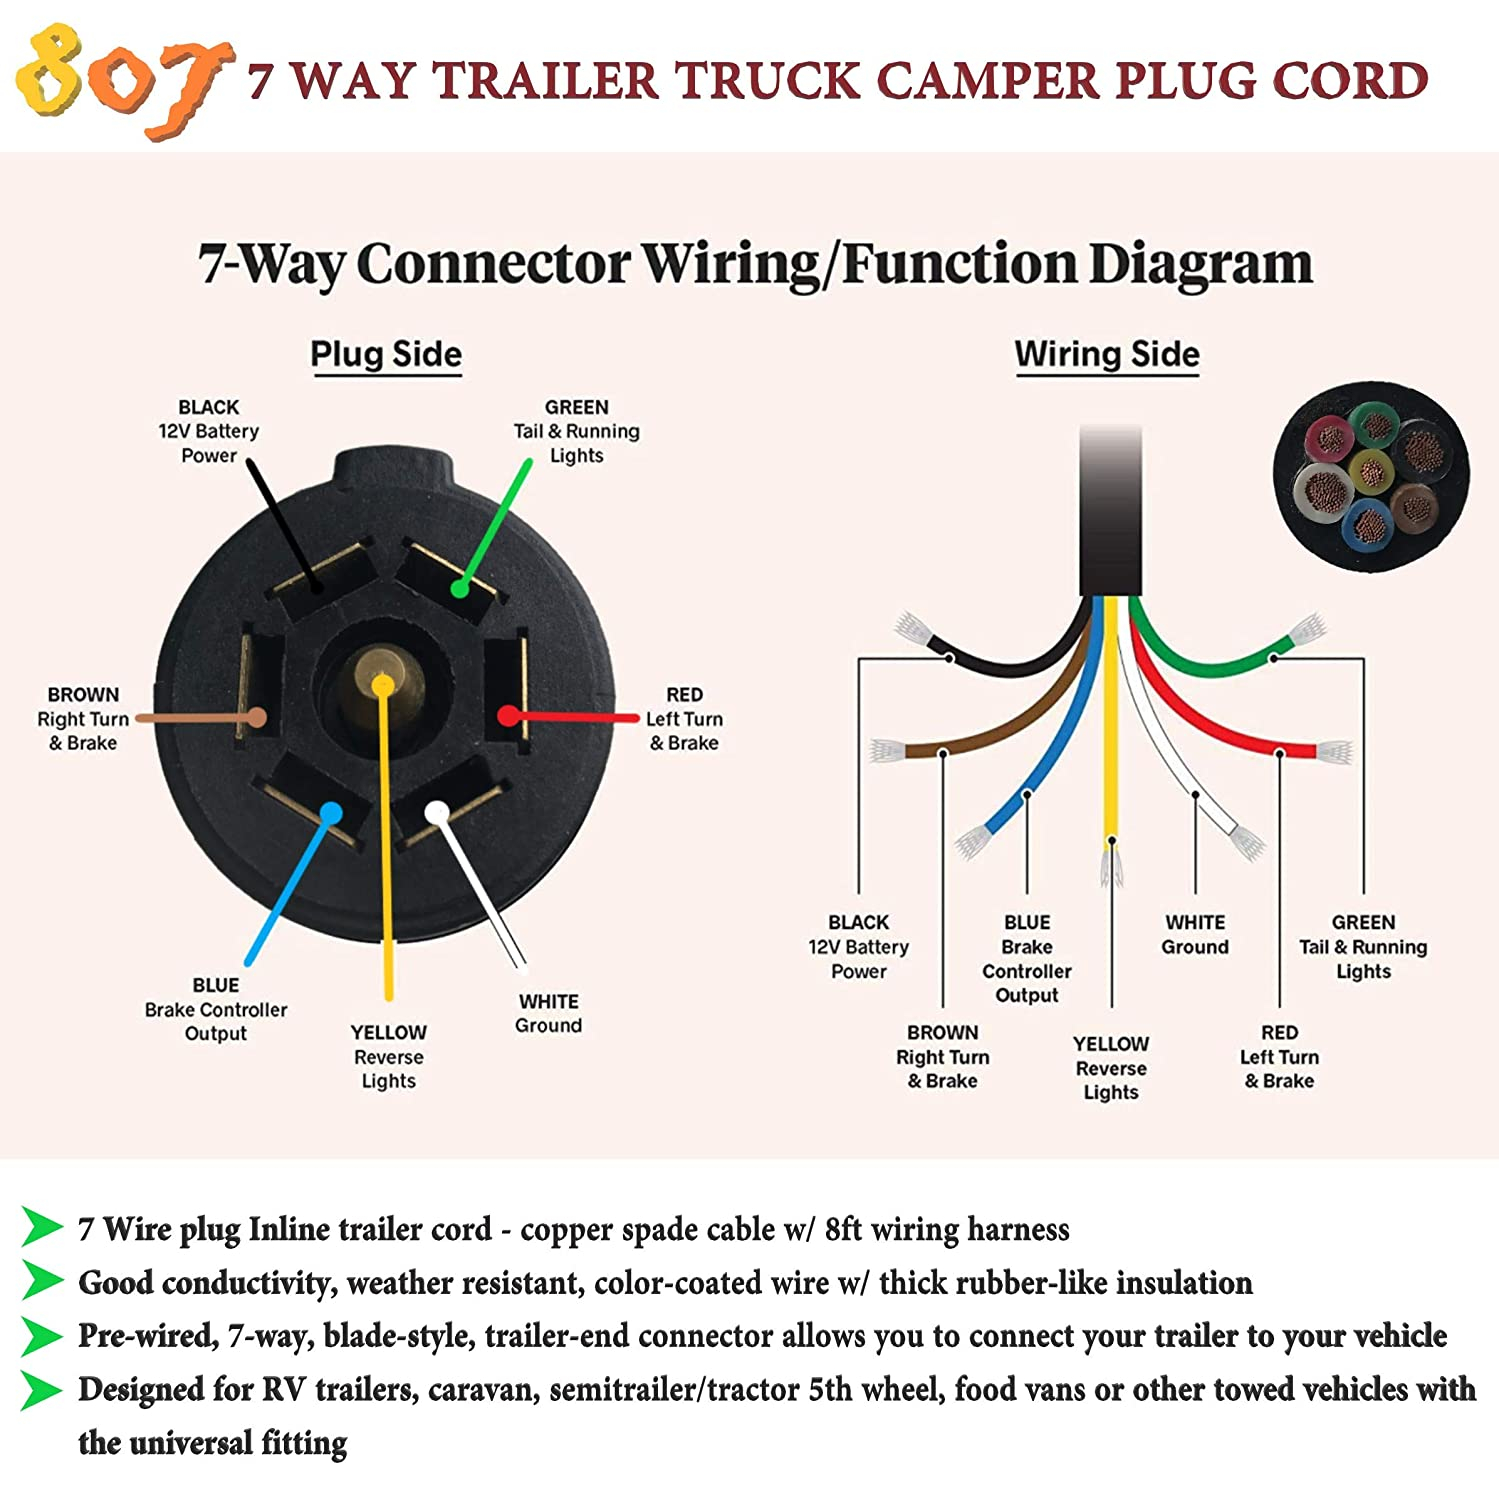 Ford Territory Trailer Plug Wiring Diagram